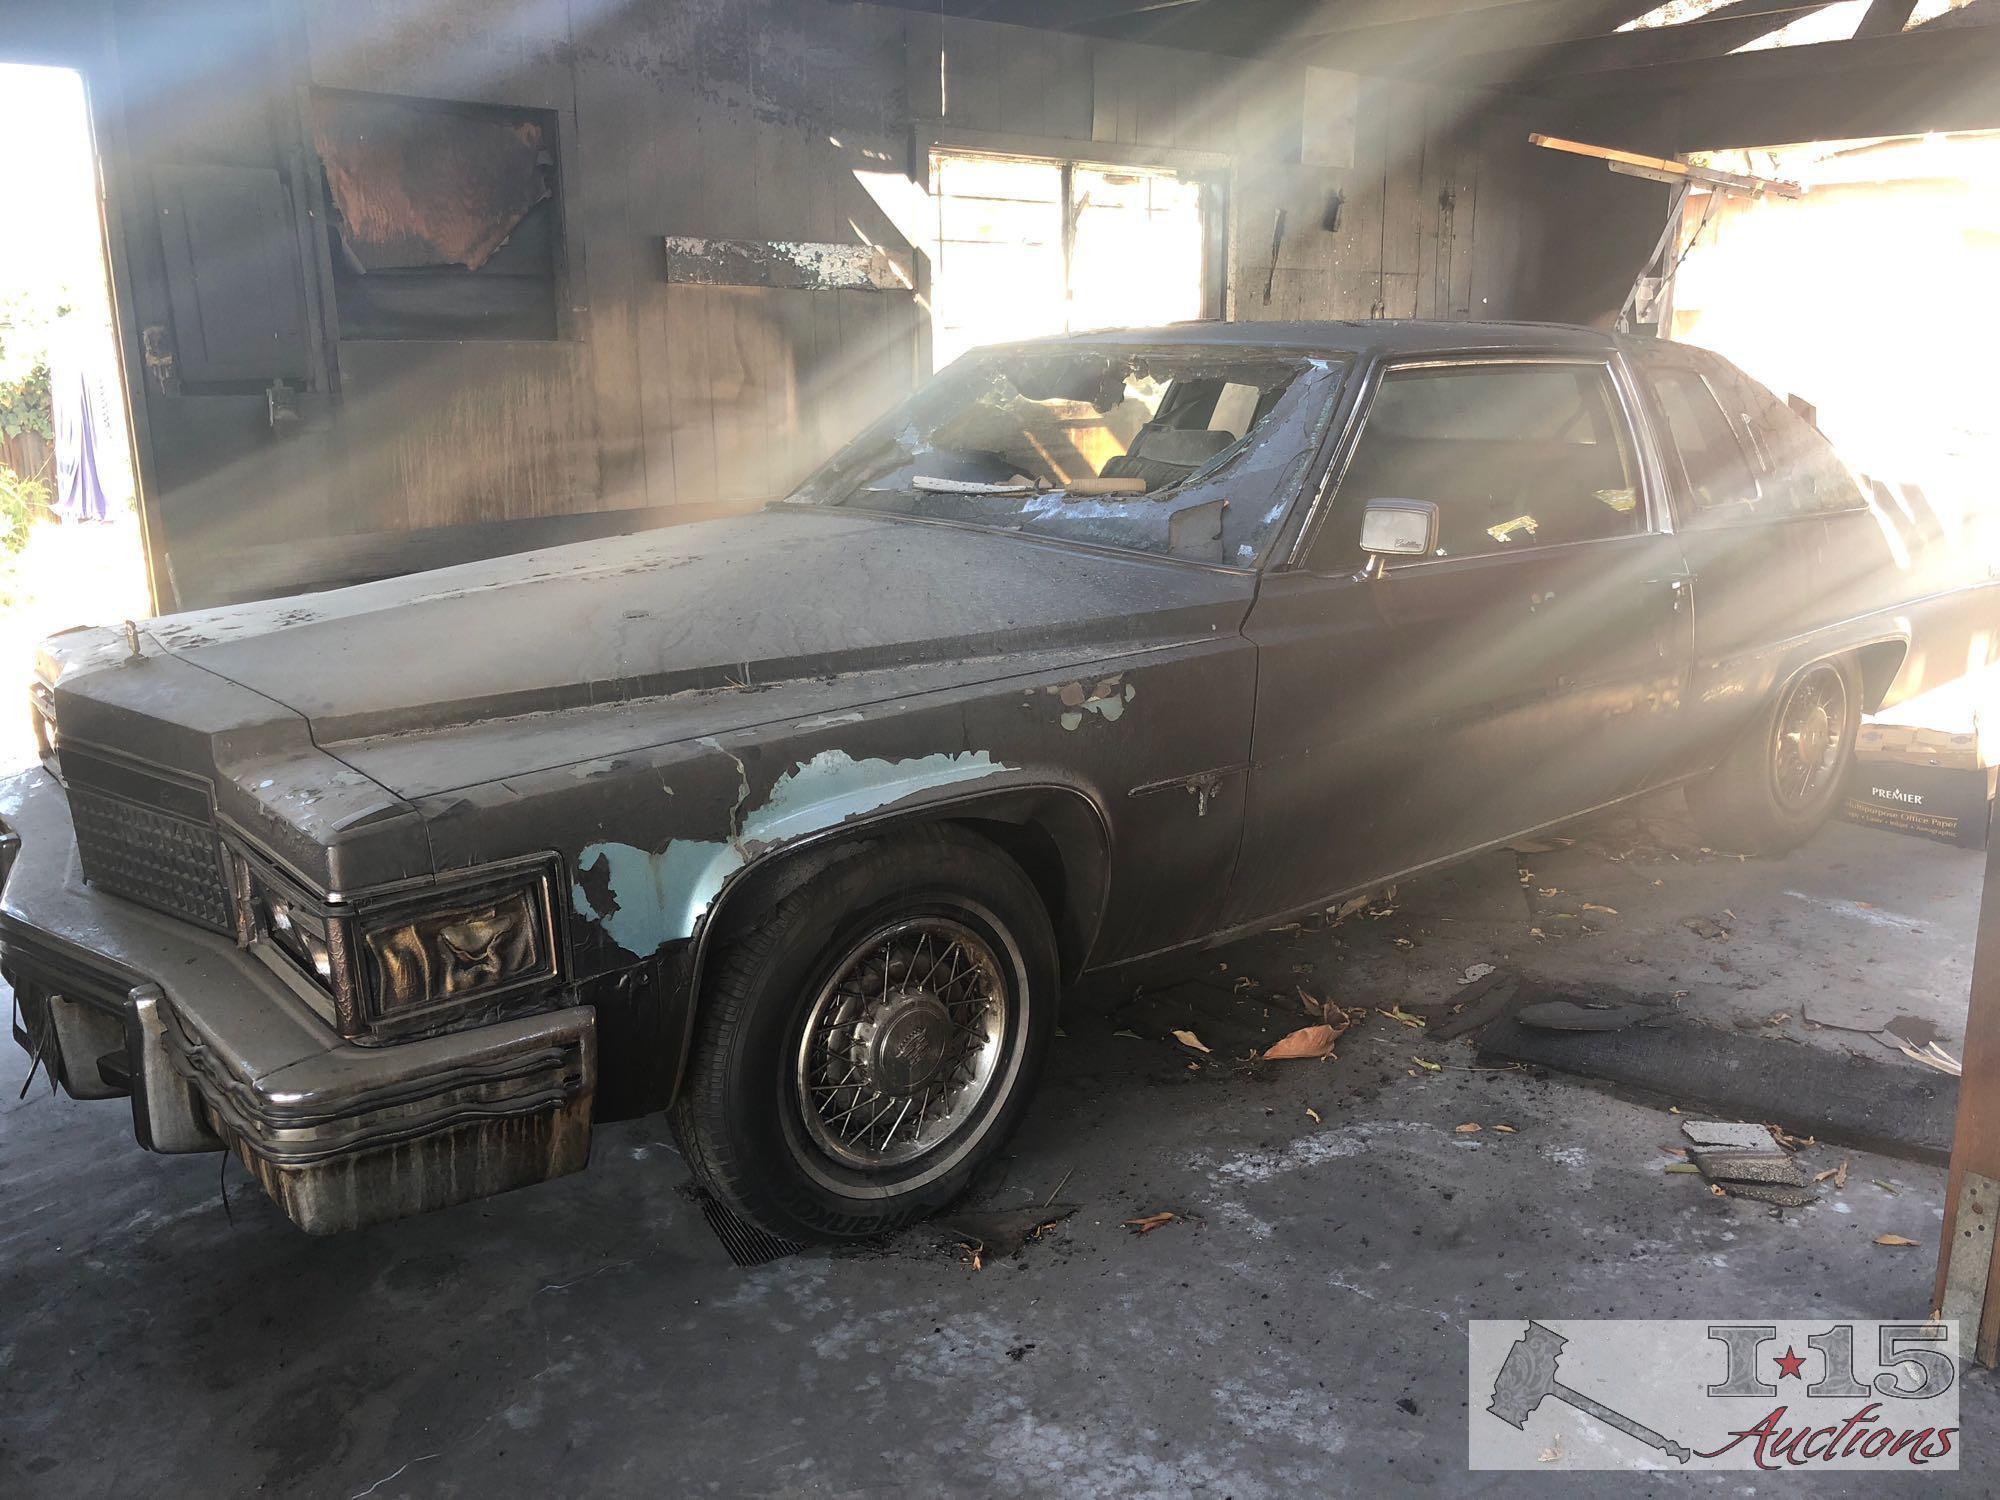 1979 Cadillac Coupe de Ville with fire damage NEW PHOTOS